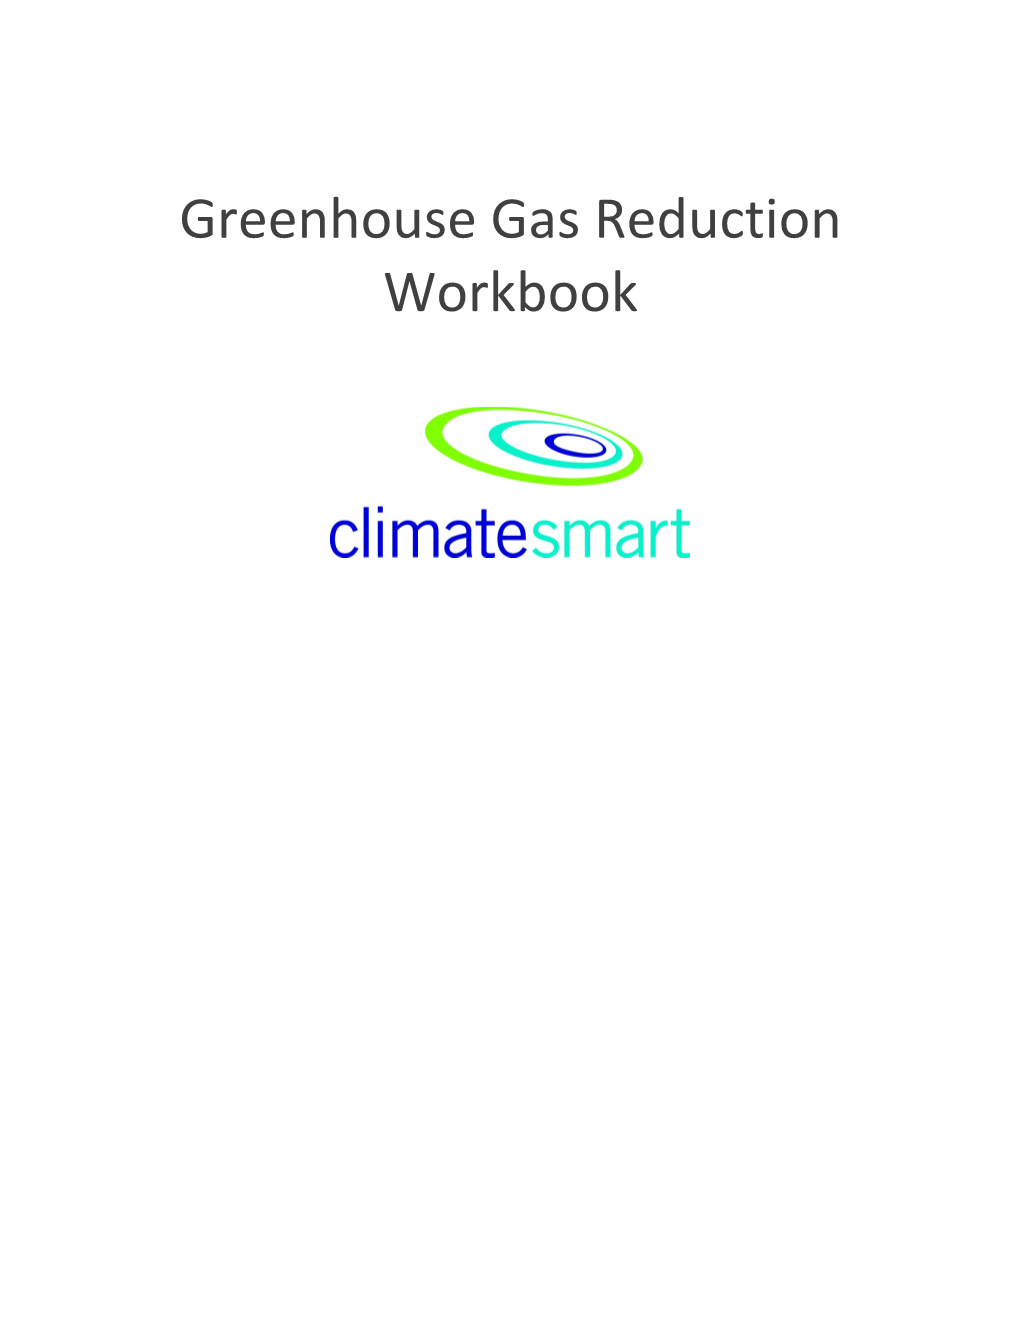 Greenhouse Gas Reduction Workbook